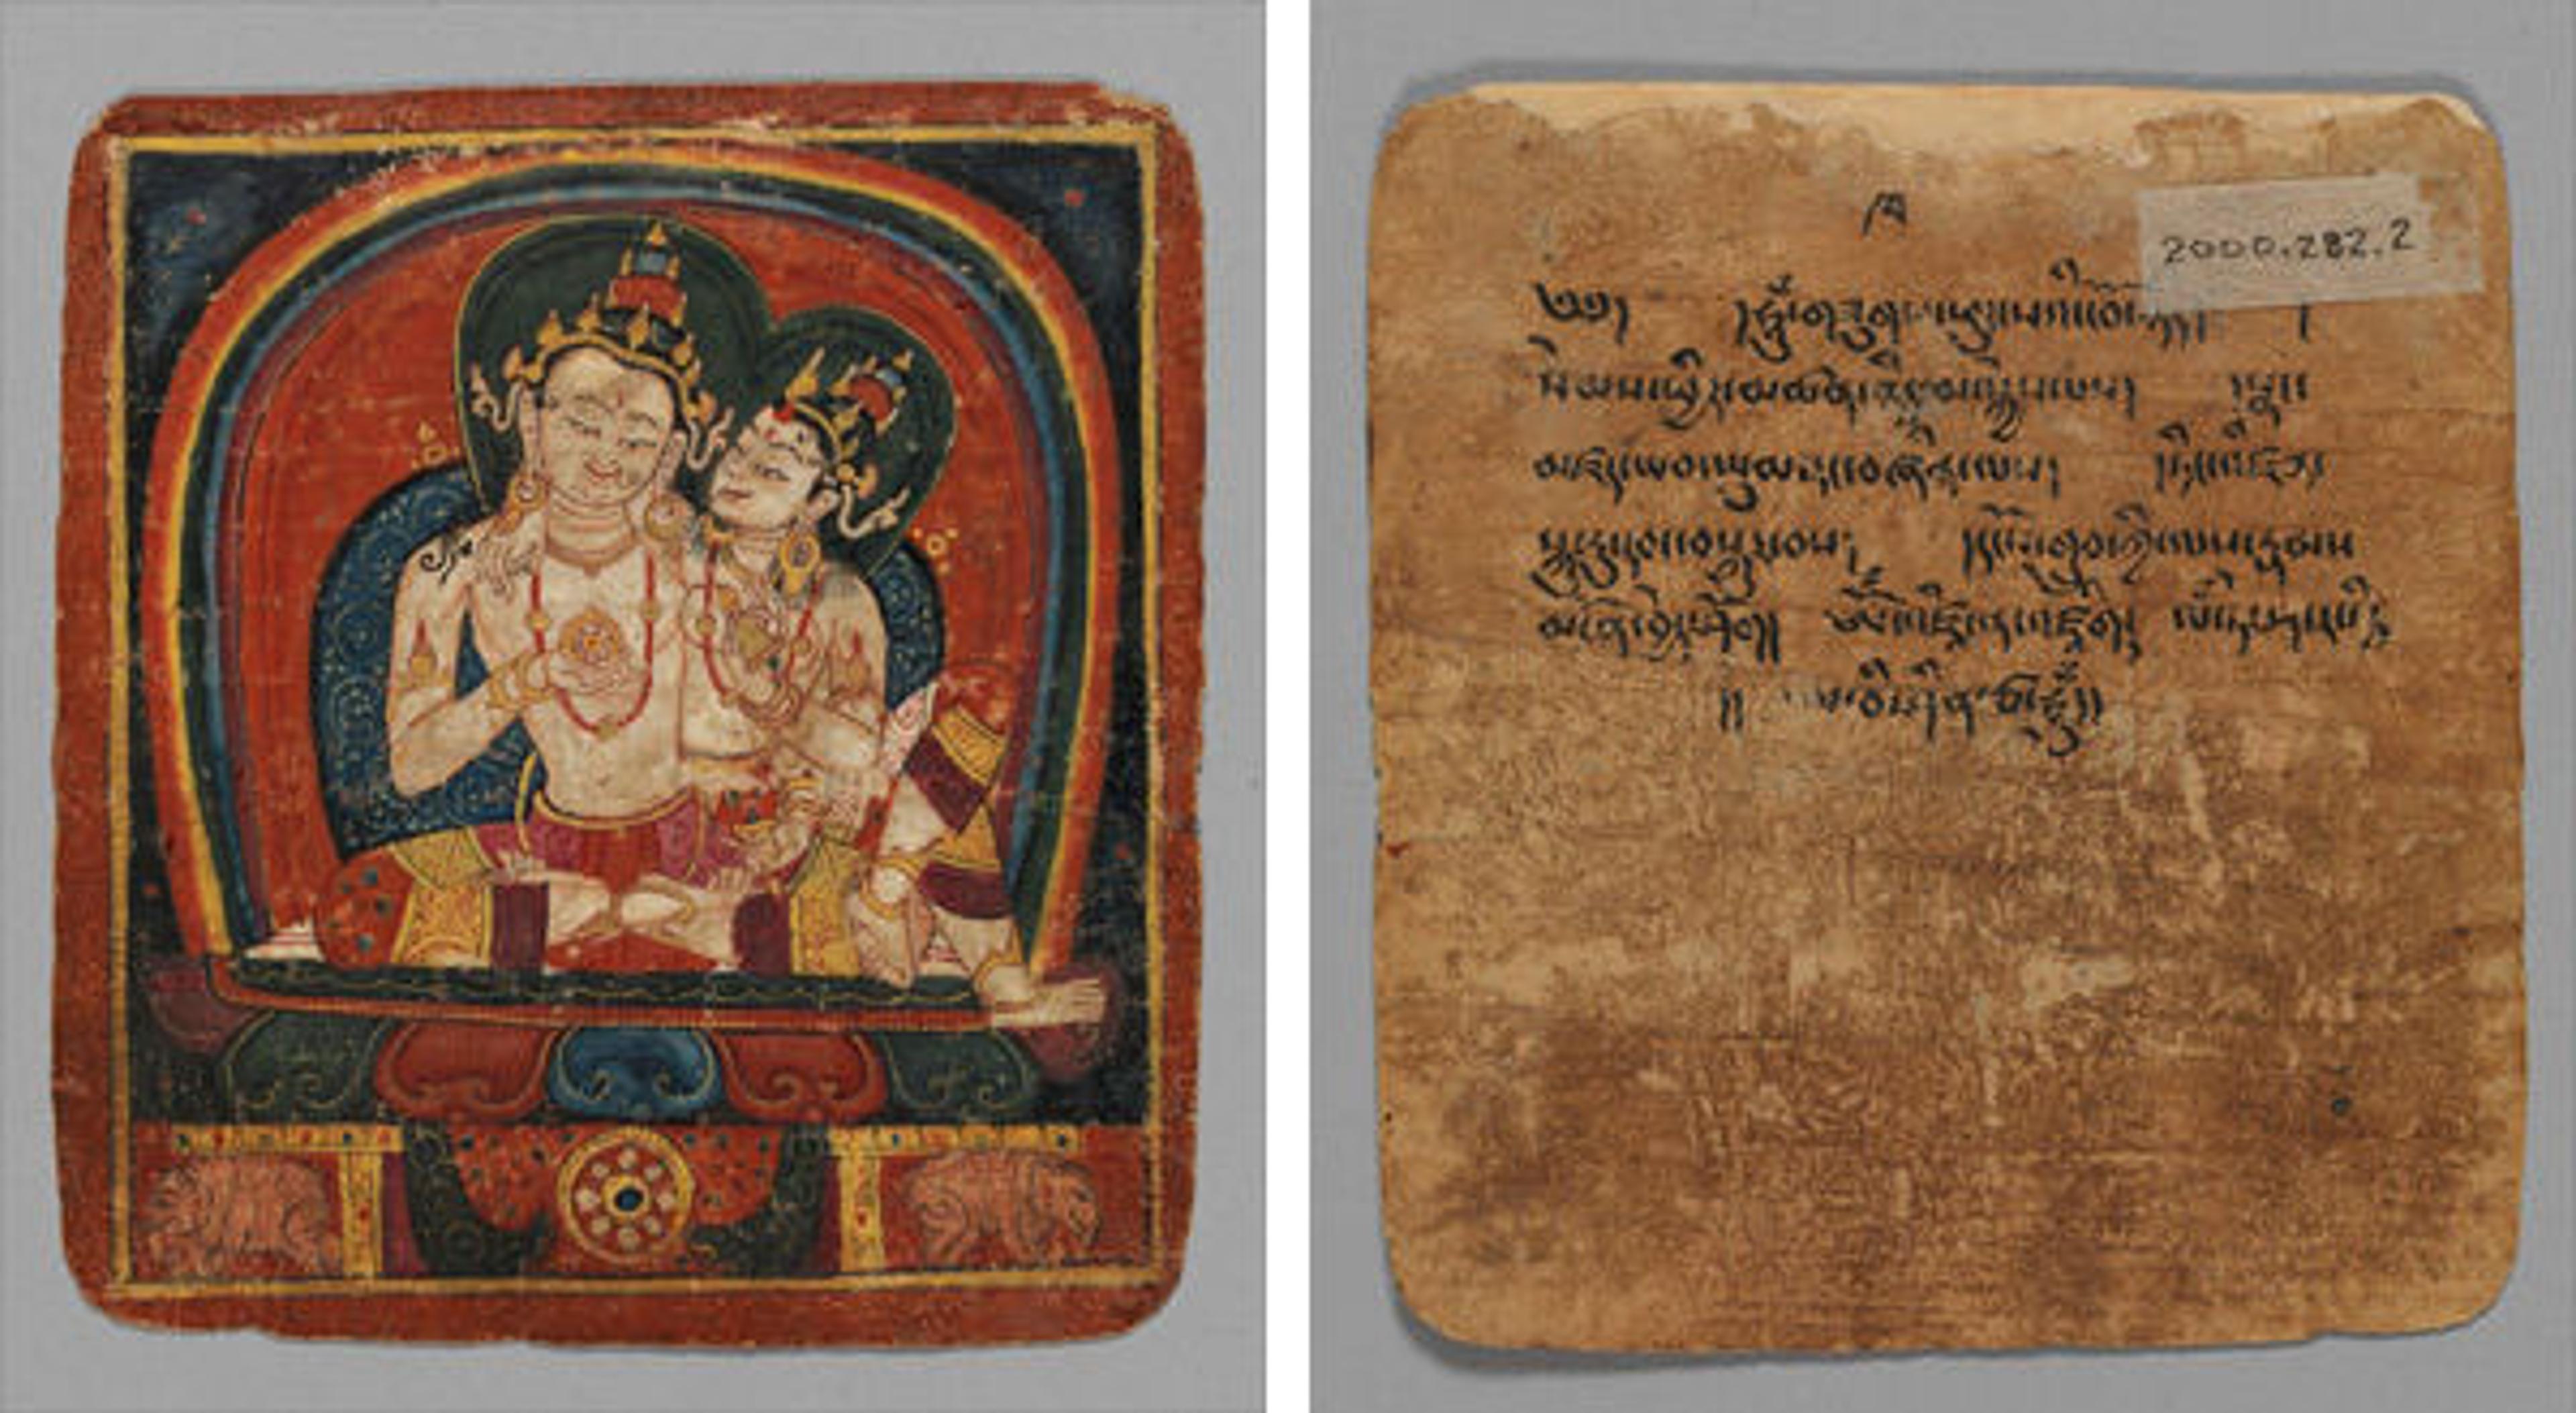 Initiation Card (Tsakalis), early 15th century. Tibet. 2000.282.2